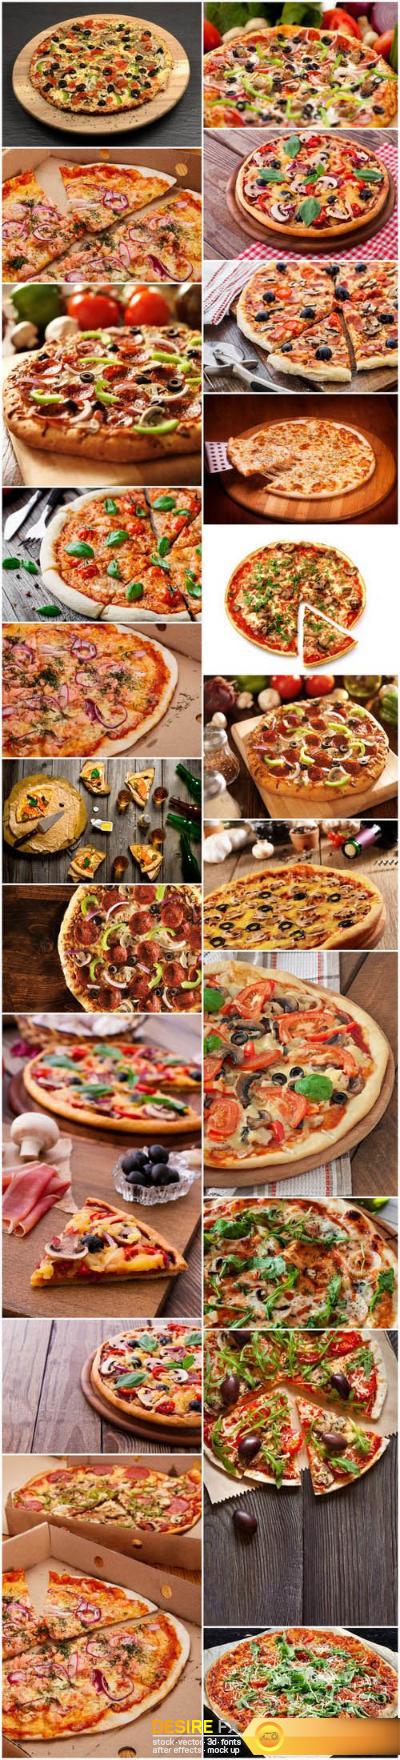 Tasty Pizza – Italian Food, Set of 21xUHQ JPEG Professional Stock Images